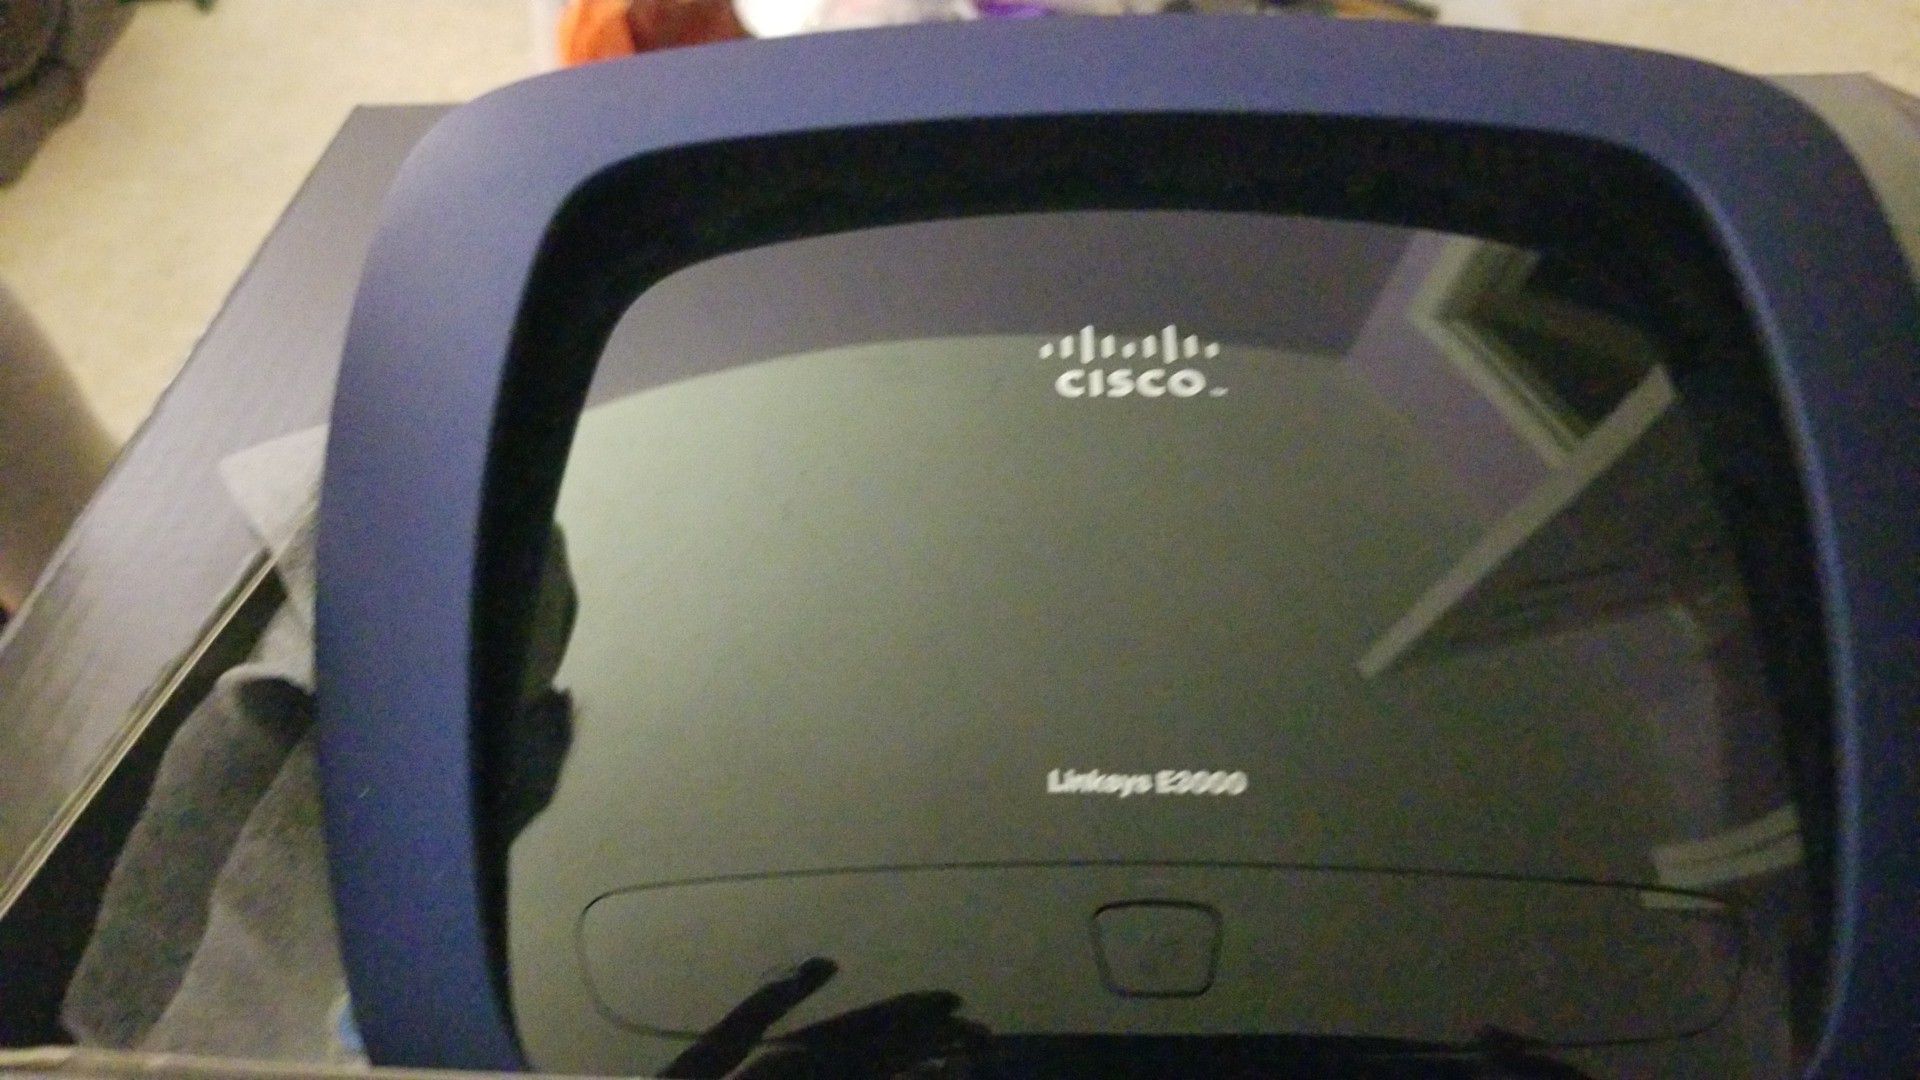 Cisco linksys e3000 wireless router